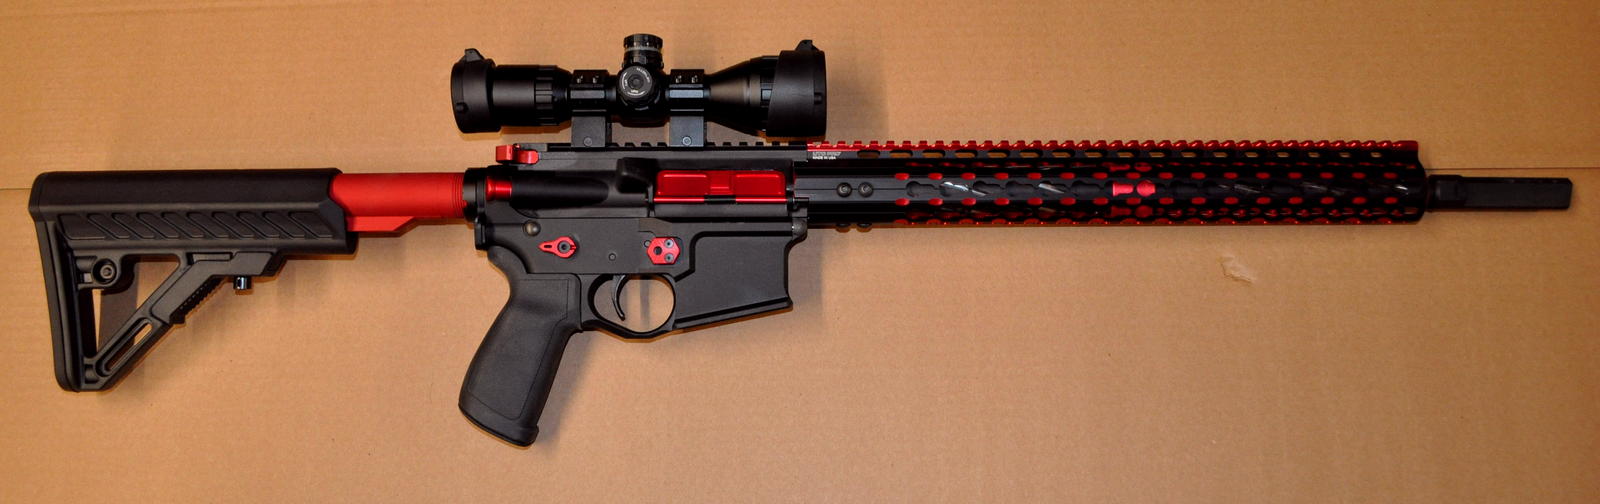 Image of a CBOY ARMS built custom rifle